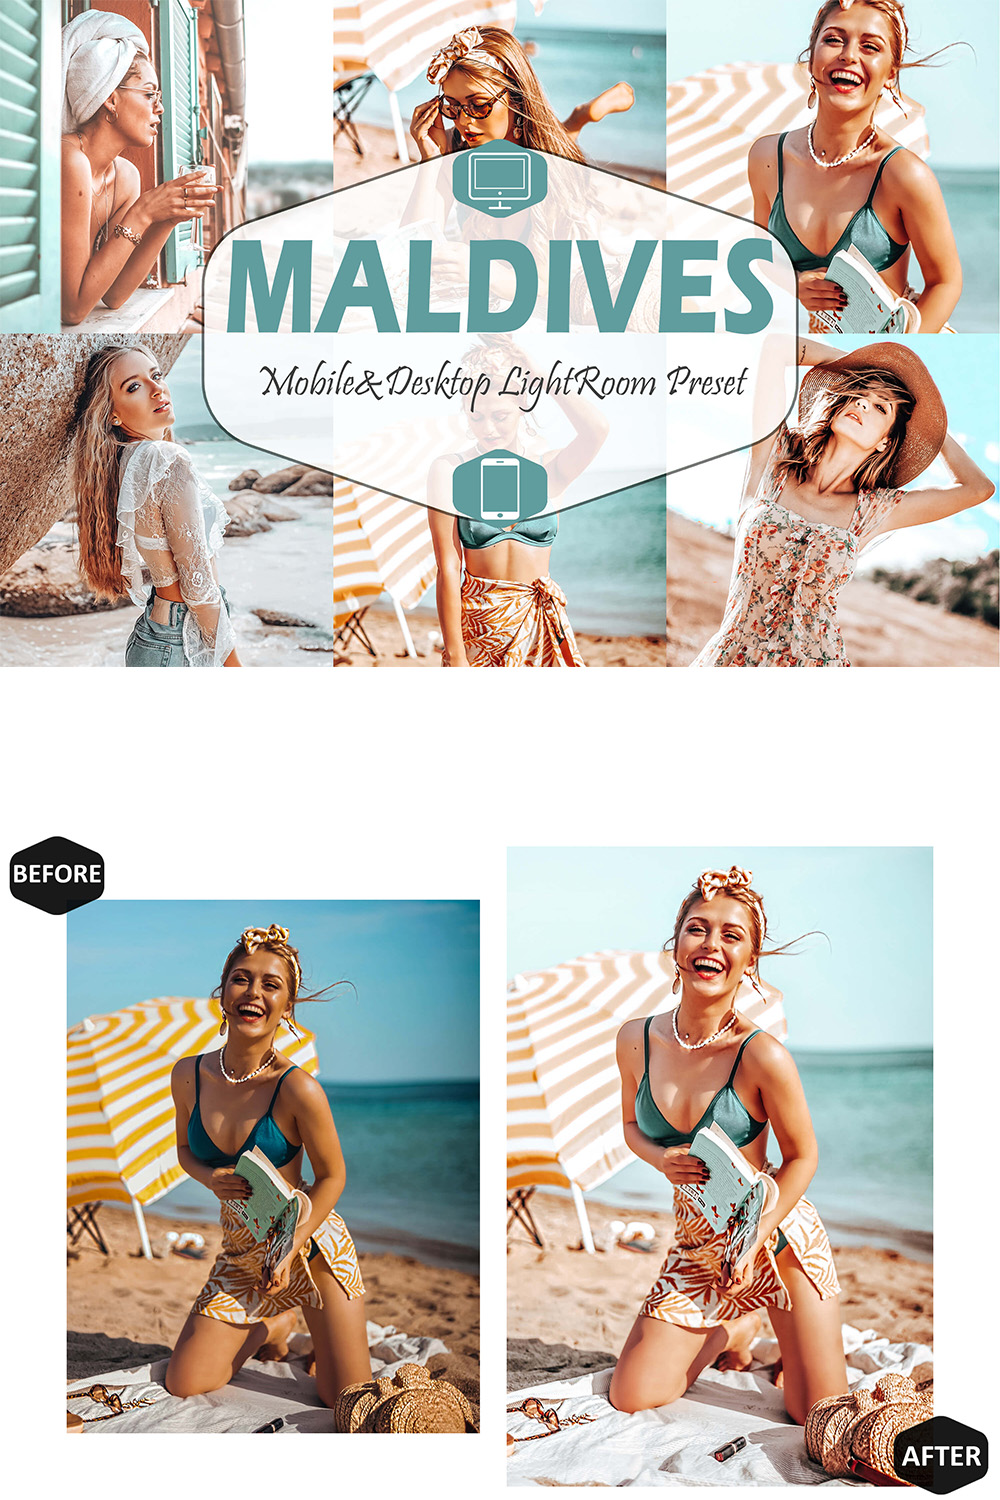 10 Maldives Mobile & Desktop Lightroom Presets, sea ocean LR preset, Portrait editing Filter, DNG Lifestyle Photographer Instagram Theme pinterest preview image.